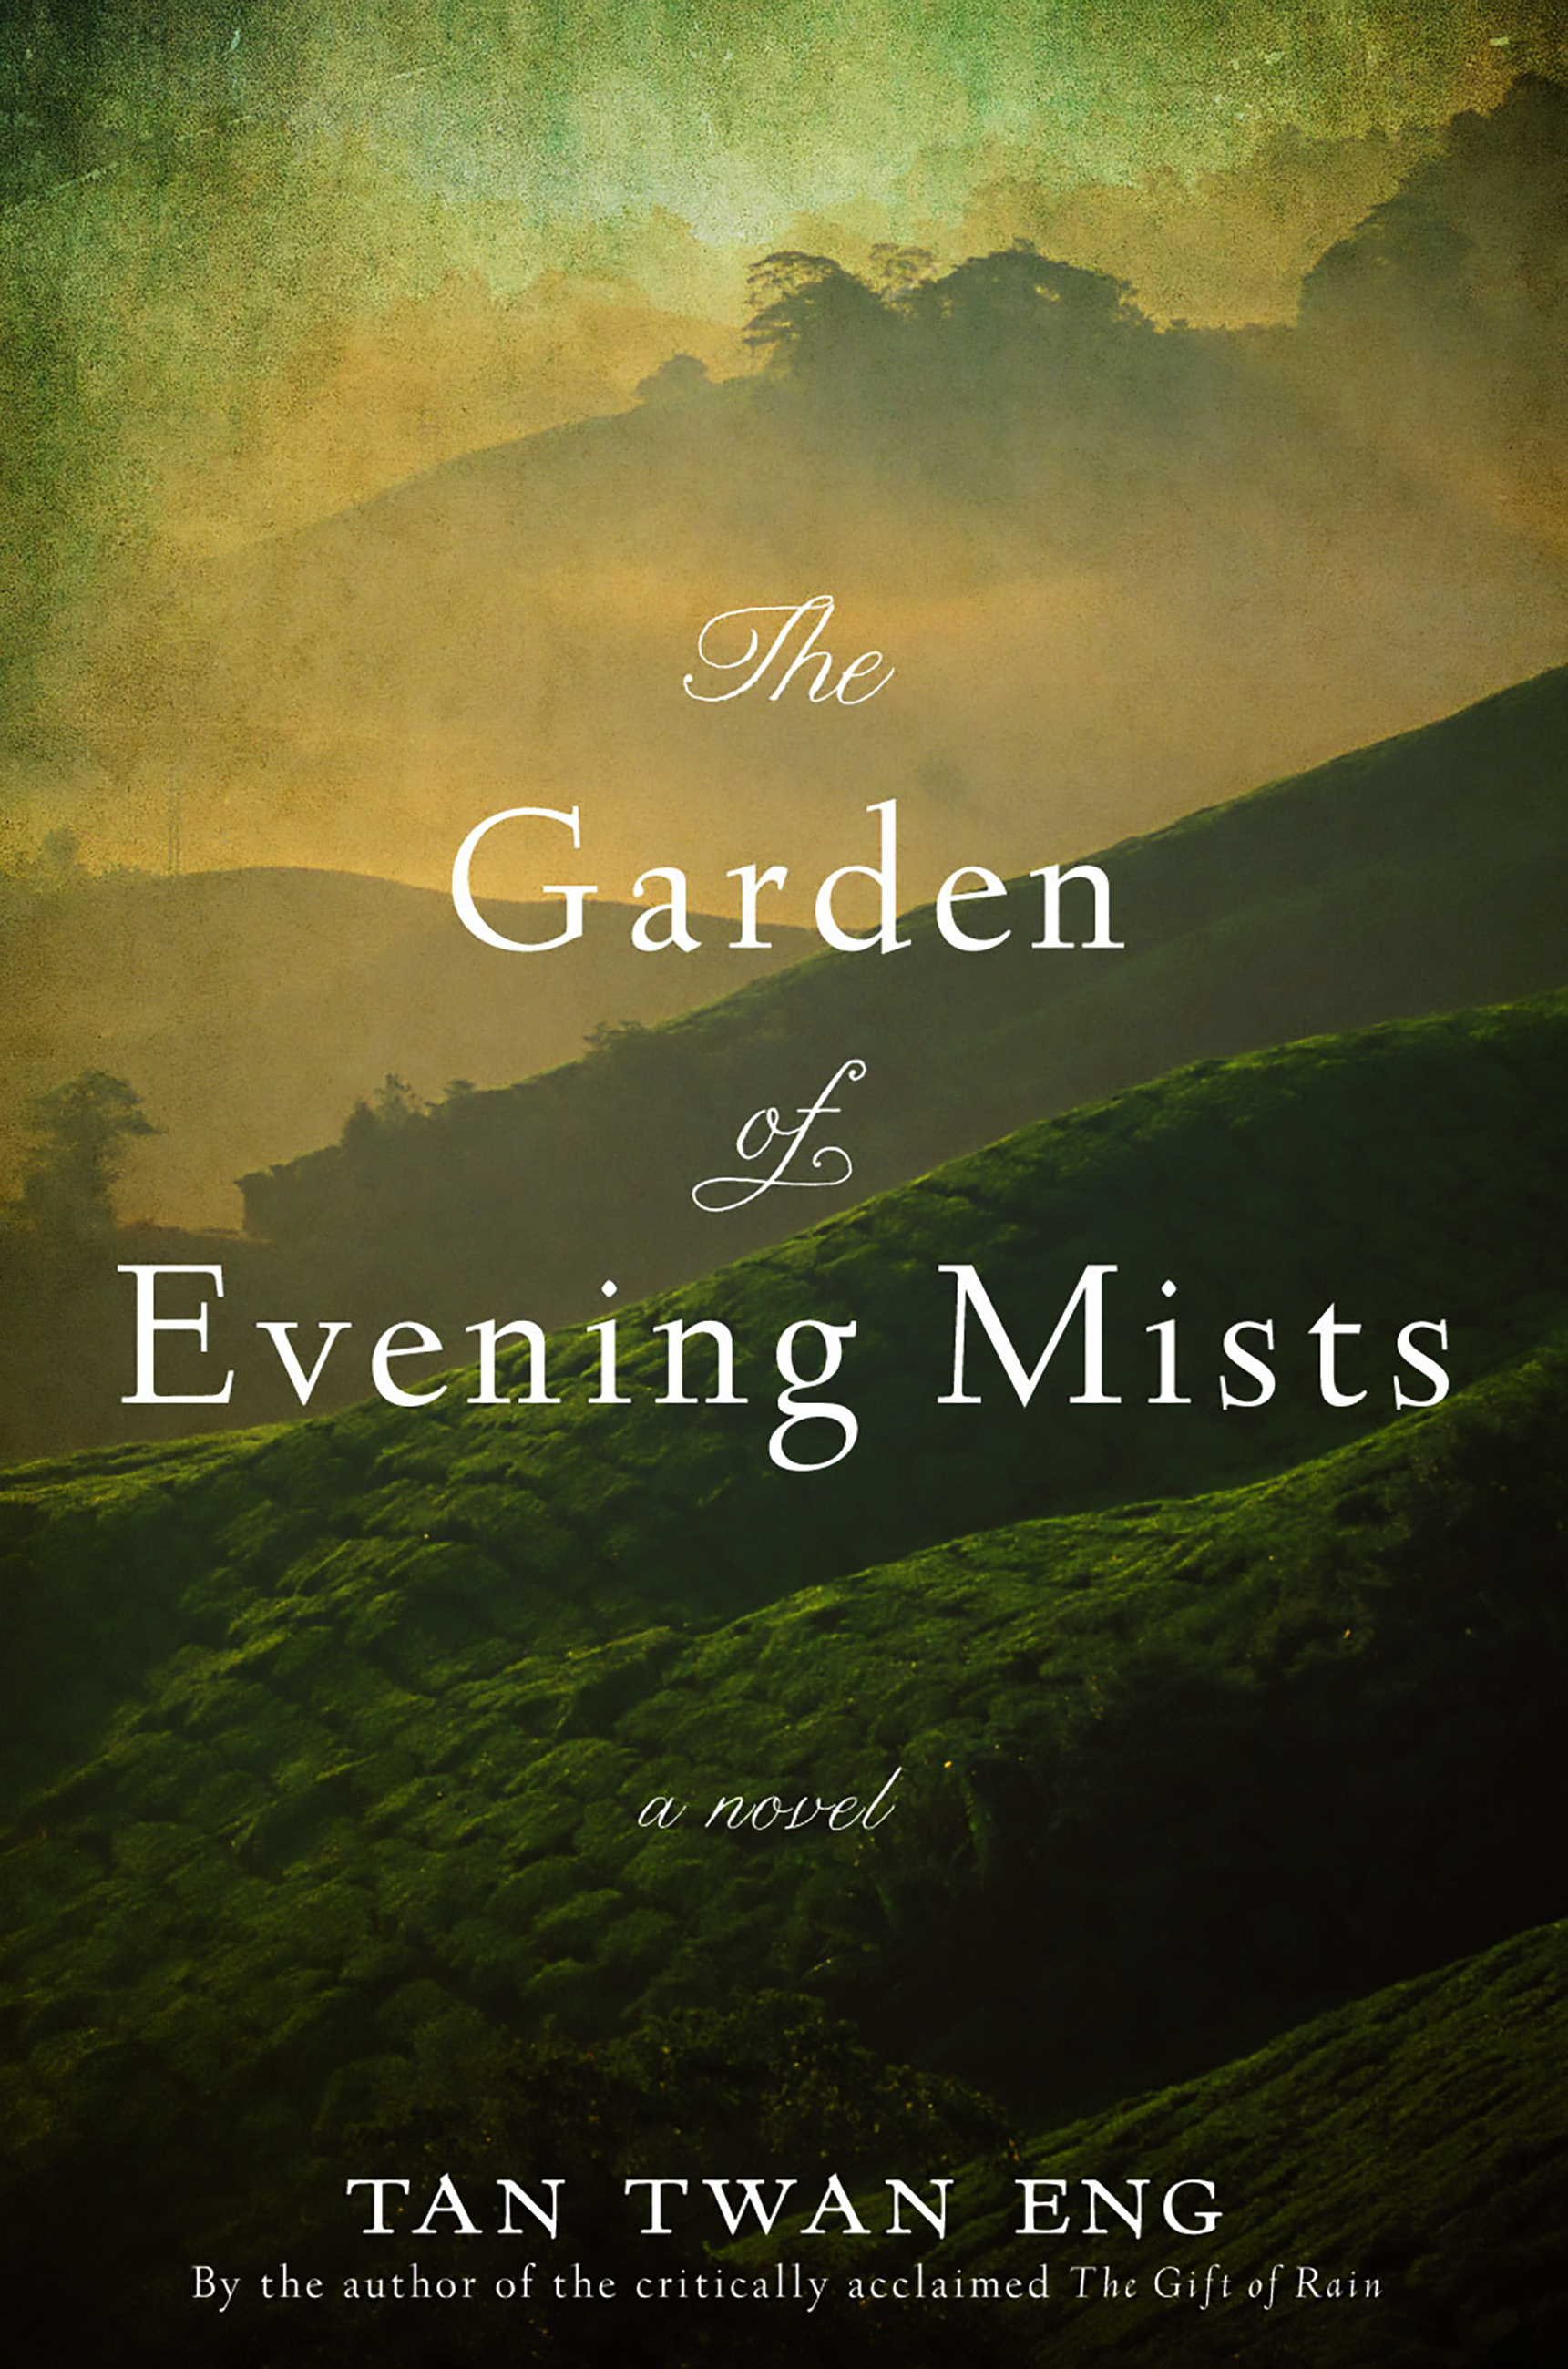 The Garden of Evening Mists by Tan Twan Eng | Hachette Book Group